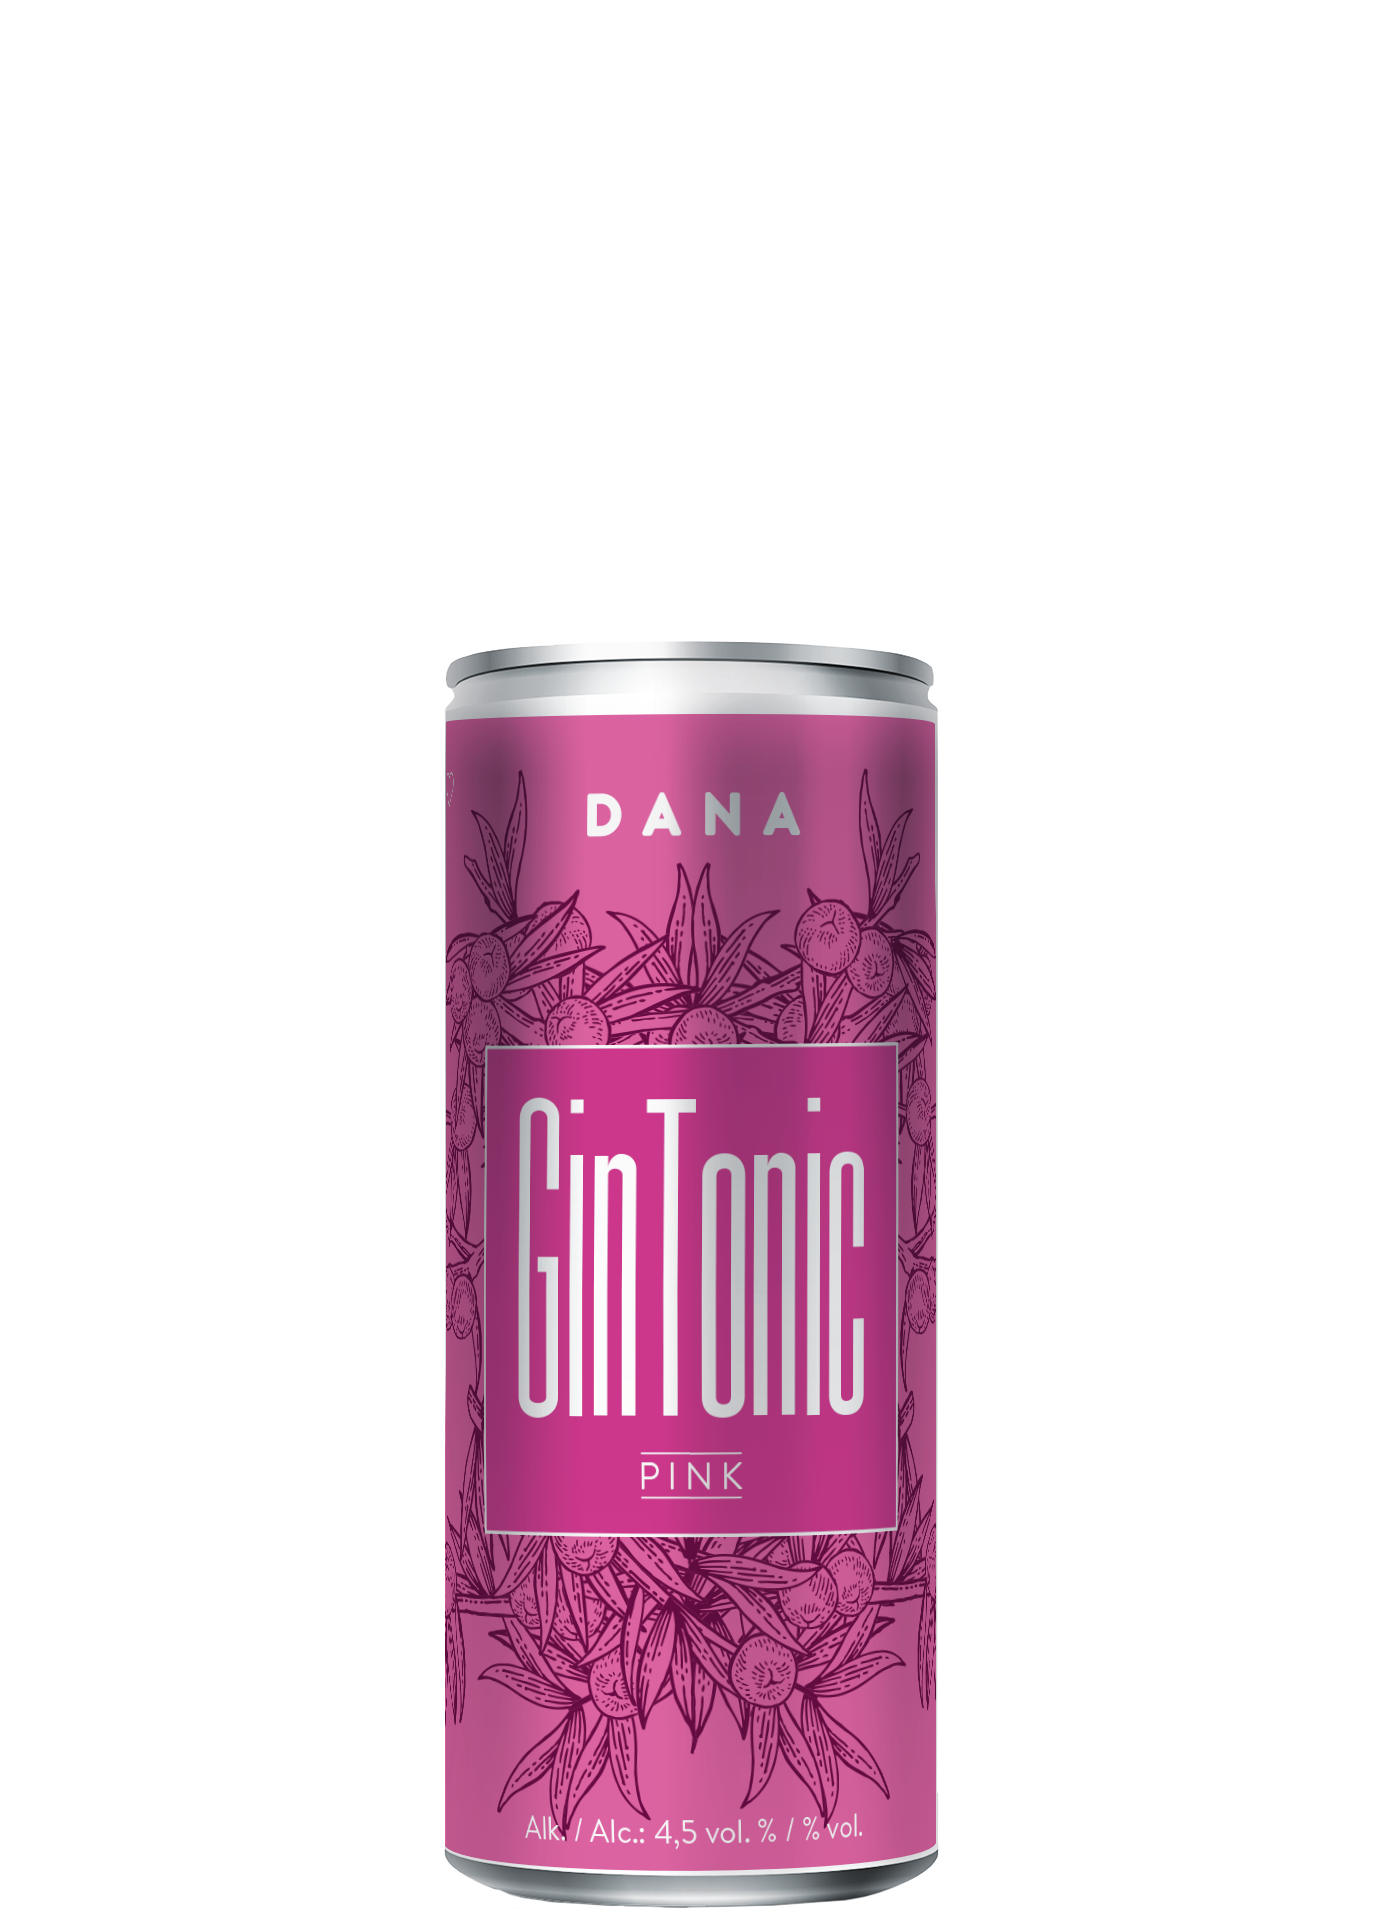 Dana Gin Tonik, pink, alk.: 4,5 % vol.